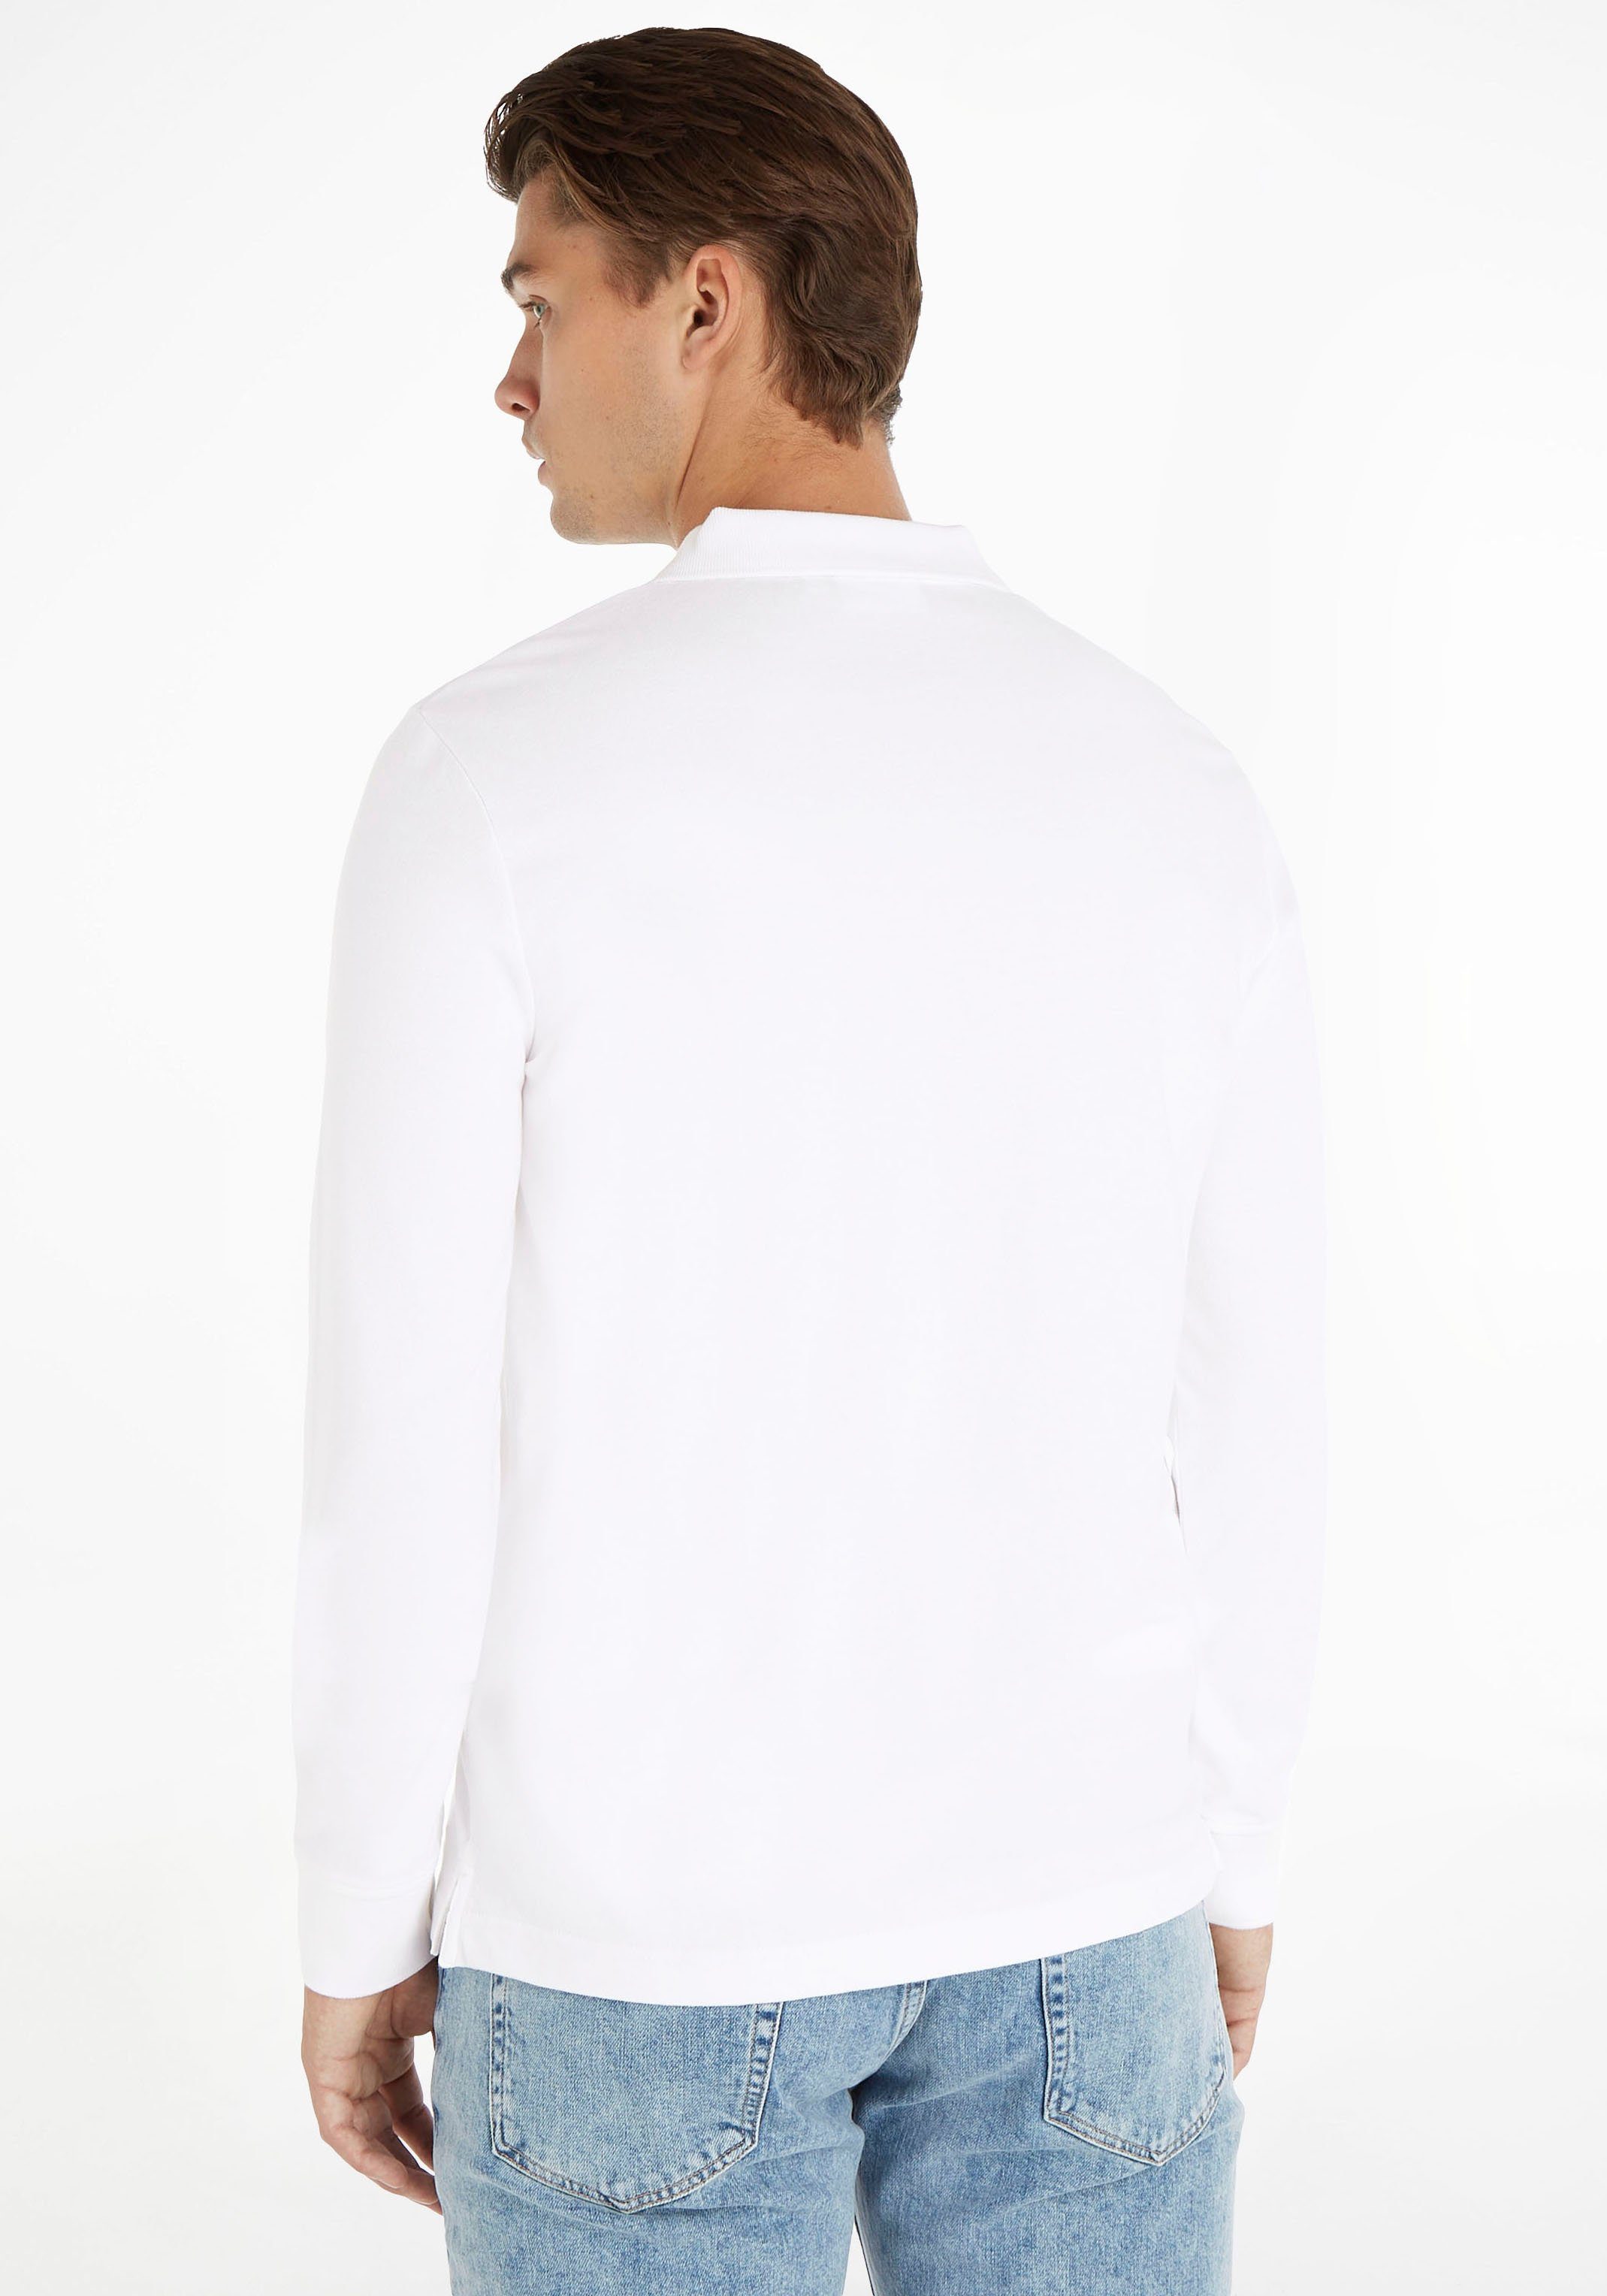 LS knopflosem STRETCH White mit Poloshirt Polokragen POLO Calvin Klein PIQUE Bright